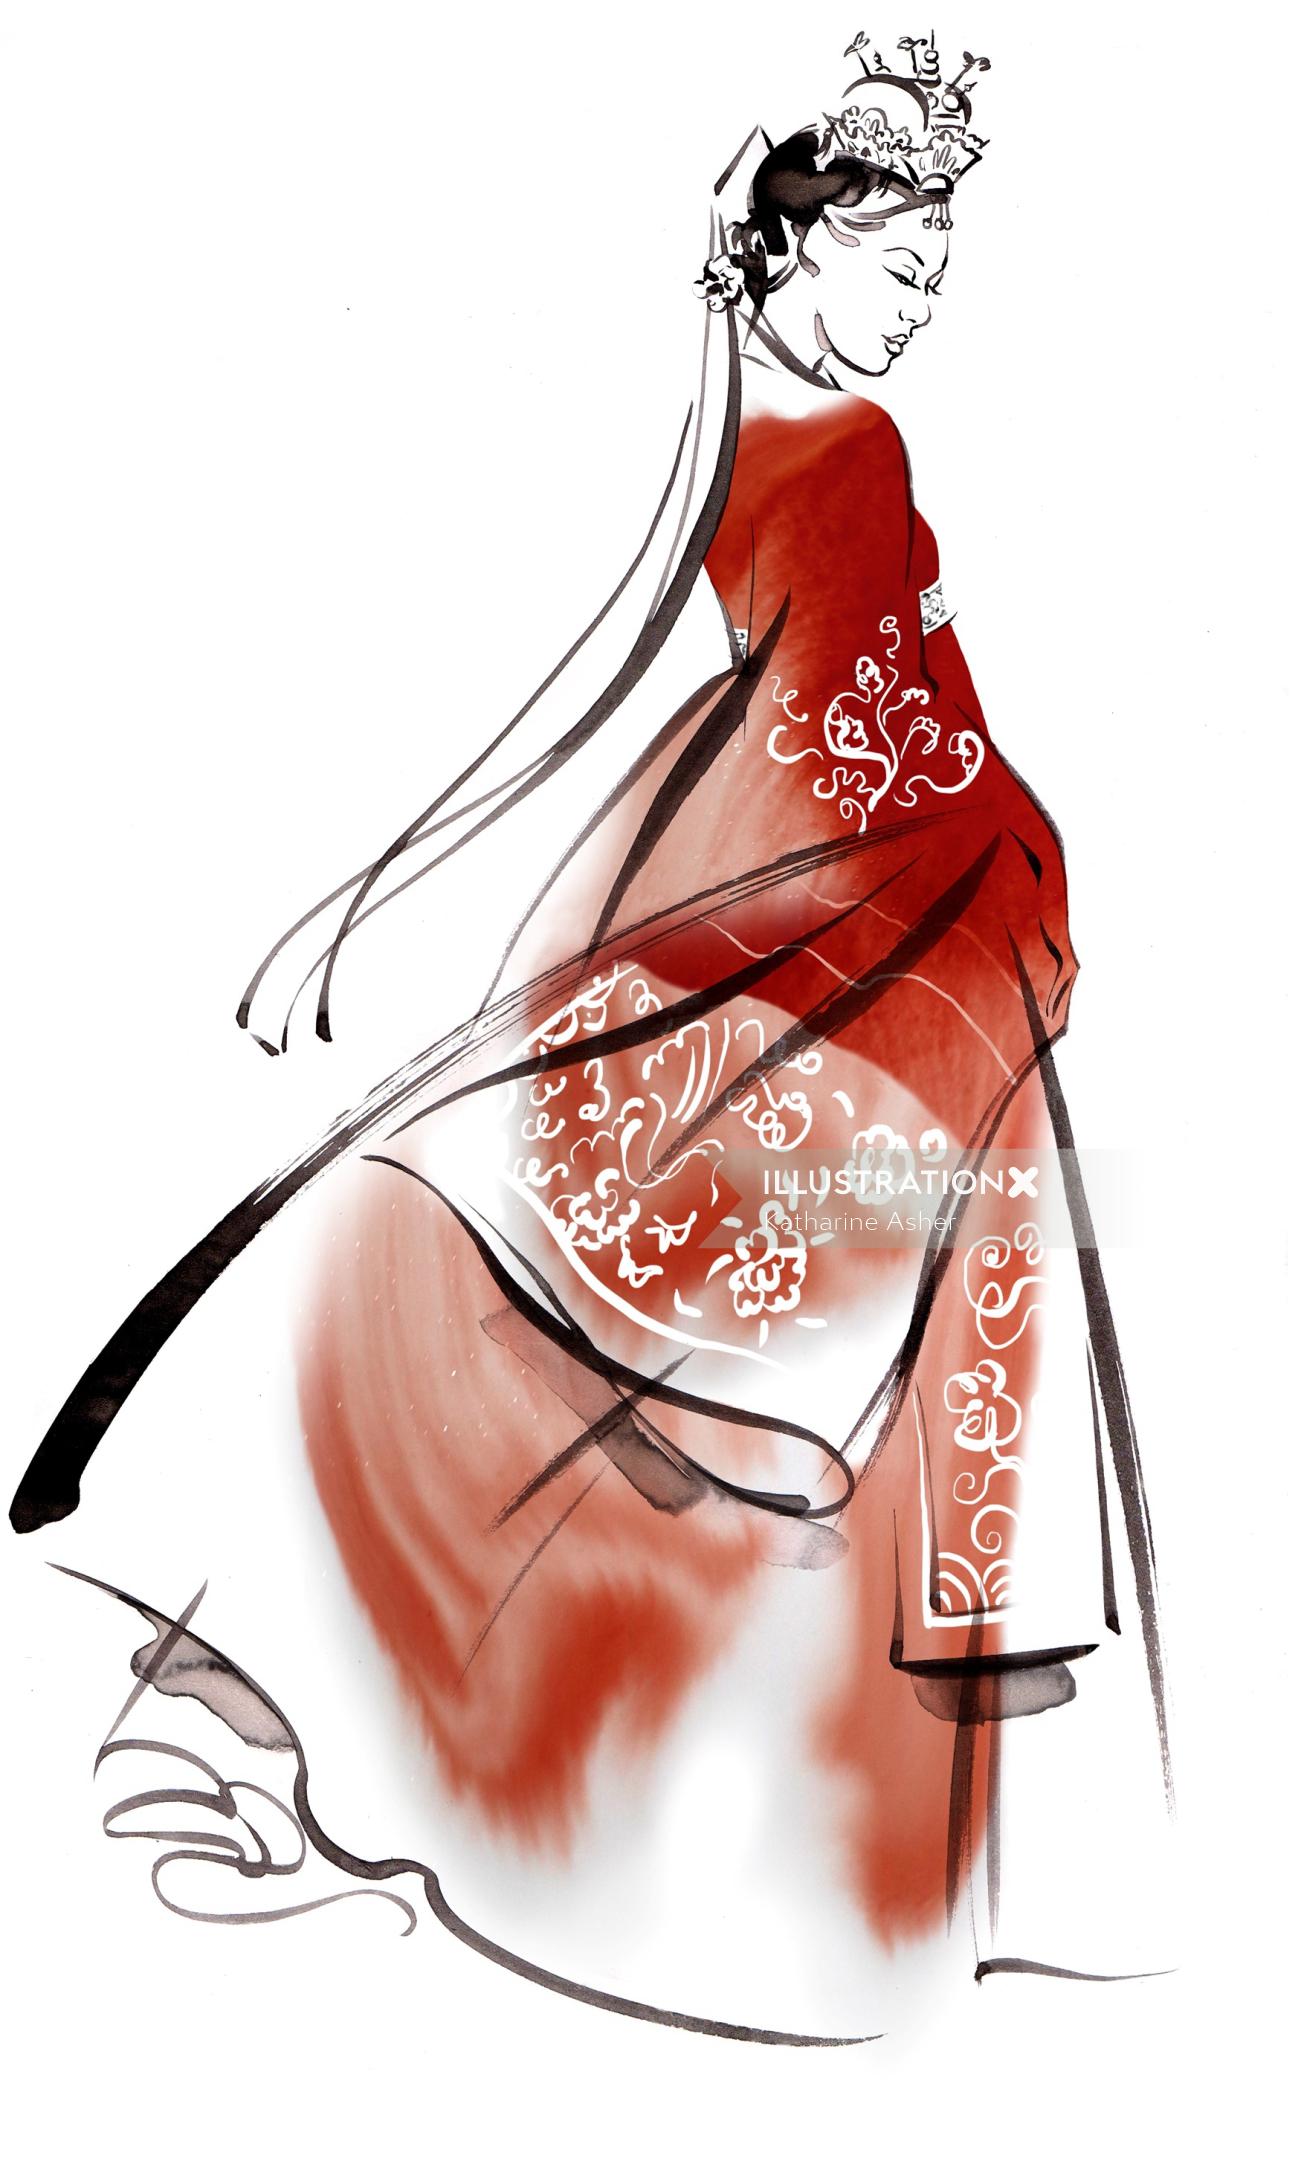 Illustration de Hanbok par Katharine Asher